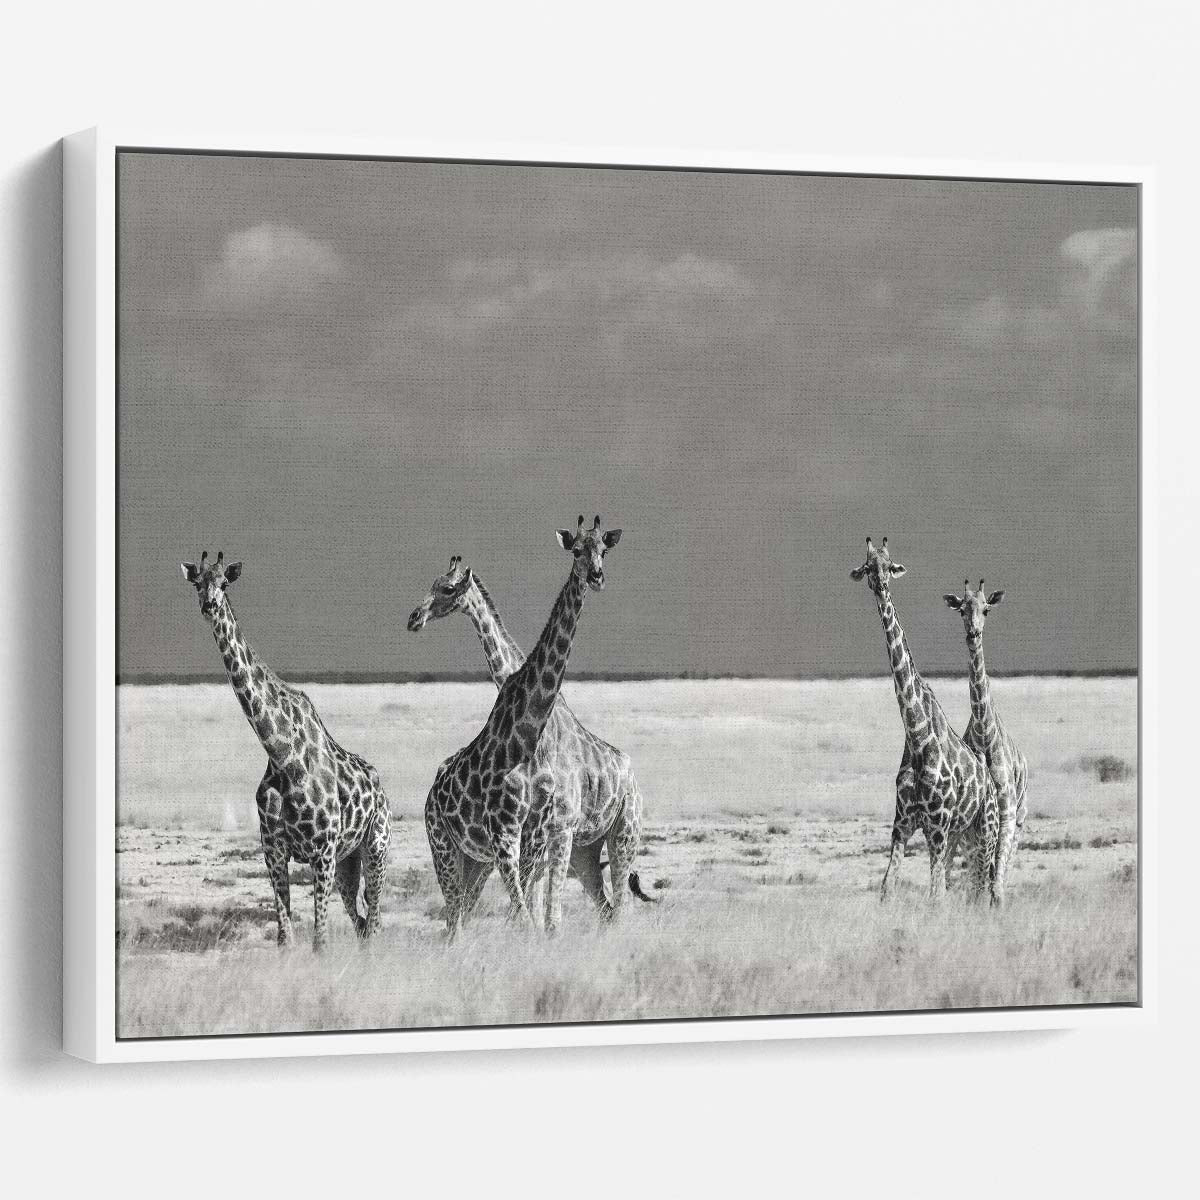 African Savanna Giraffe Family Monochrome Wall Art by Luxuriance Designs. Made in USA.